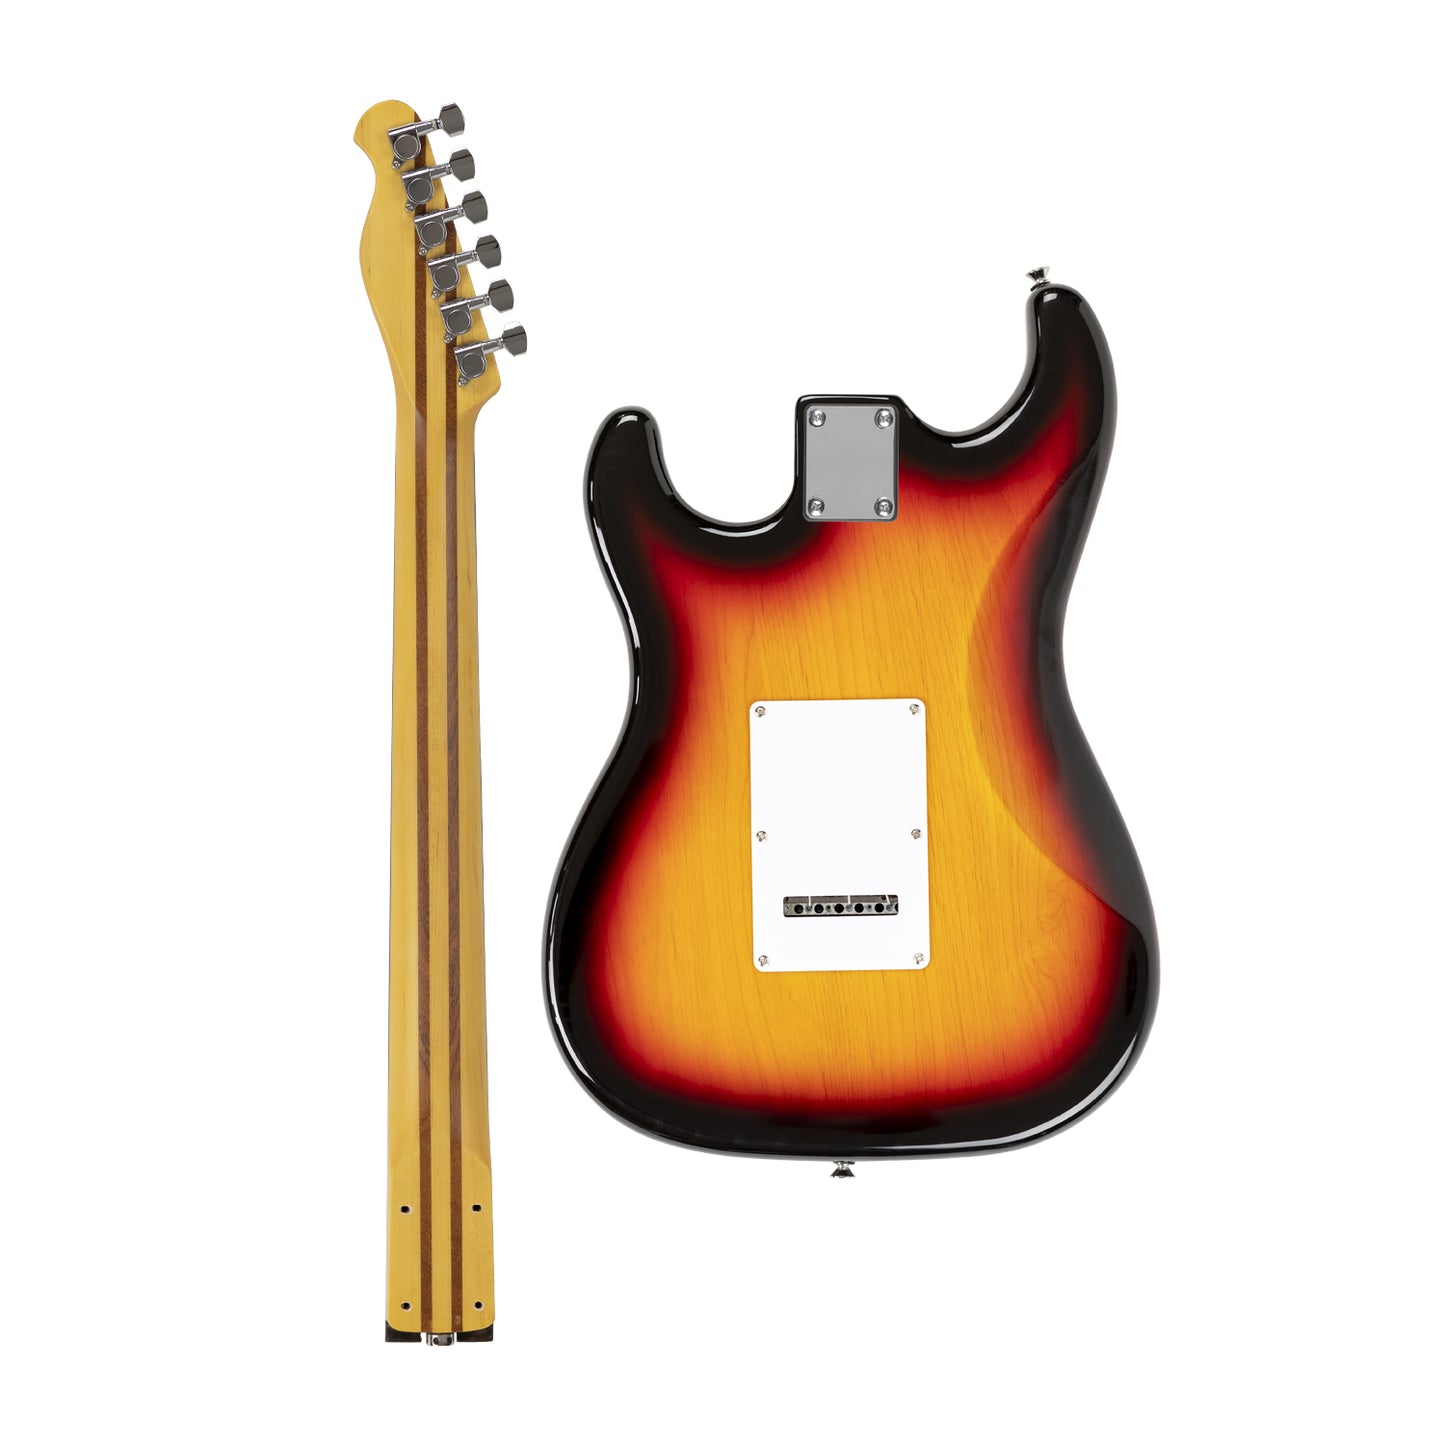 AE Guitars® Build Series Sepulveda Standard 3-Tone Sunburst (Rosewood Neck) Guitar Kit